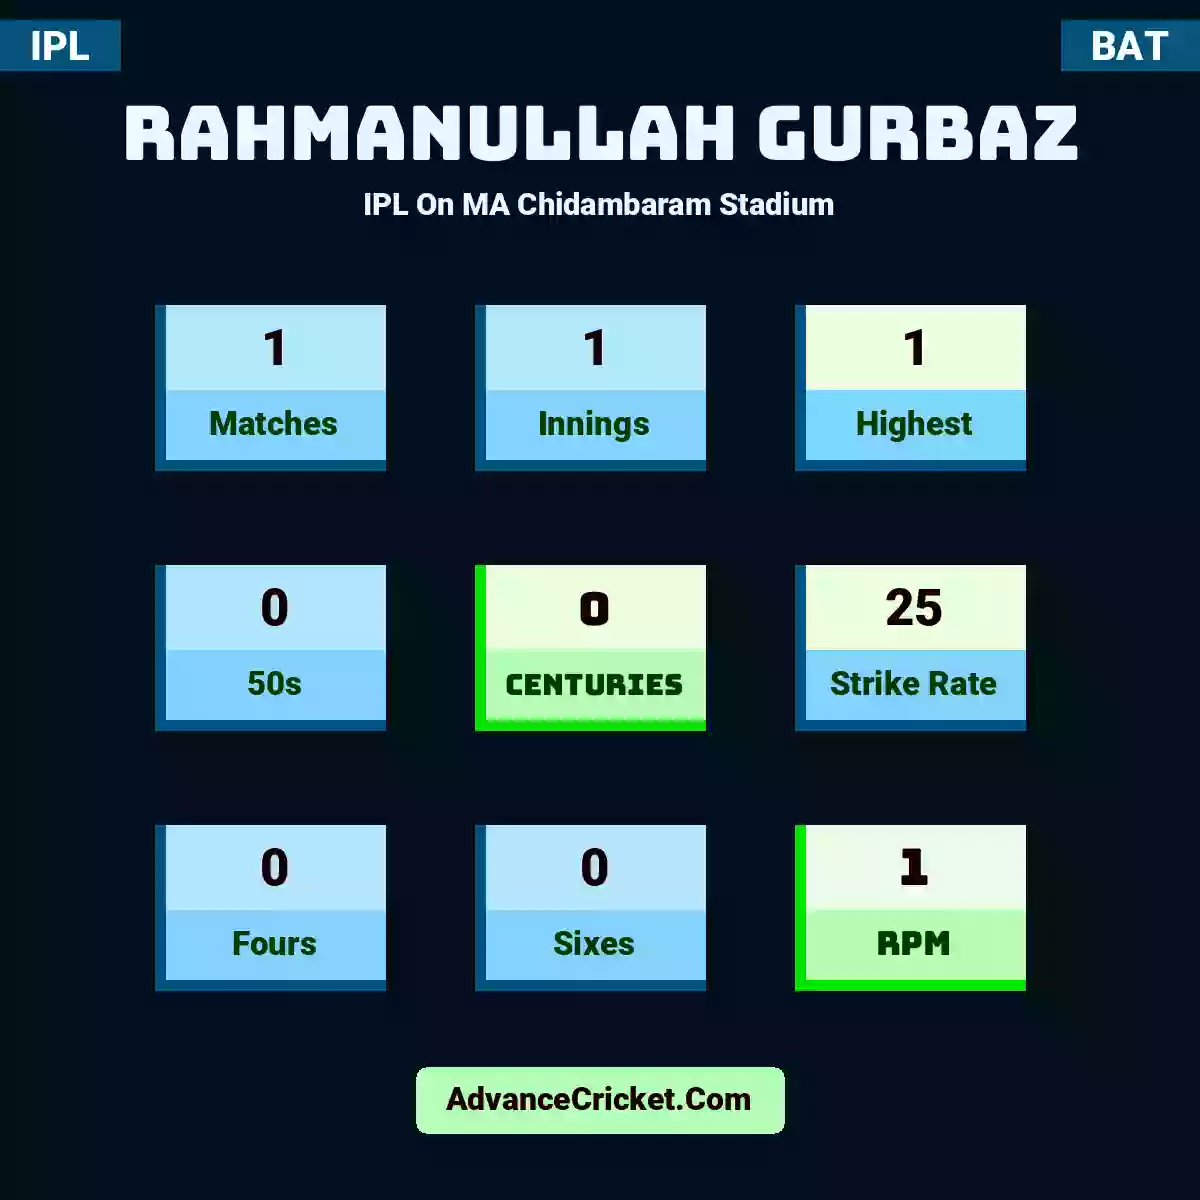 Rahmanullah Gurbaz IPL  On MA Chidambaram Stadium, Rahmanullah Gurbaz played 1 matches, scored 1 runs as highest, 0 half-centuries, and 0 centuries, with a strike rate of 25. R.Gurbaz hit 0 fours and 0 sixes, with an RPM of 1.